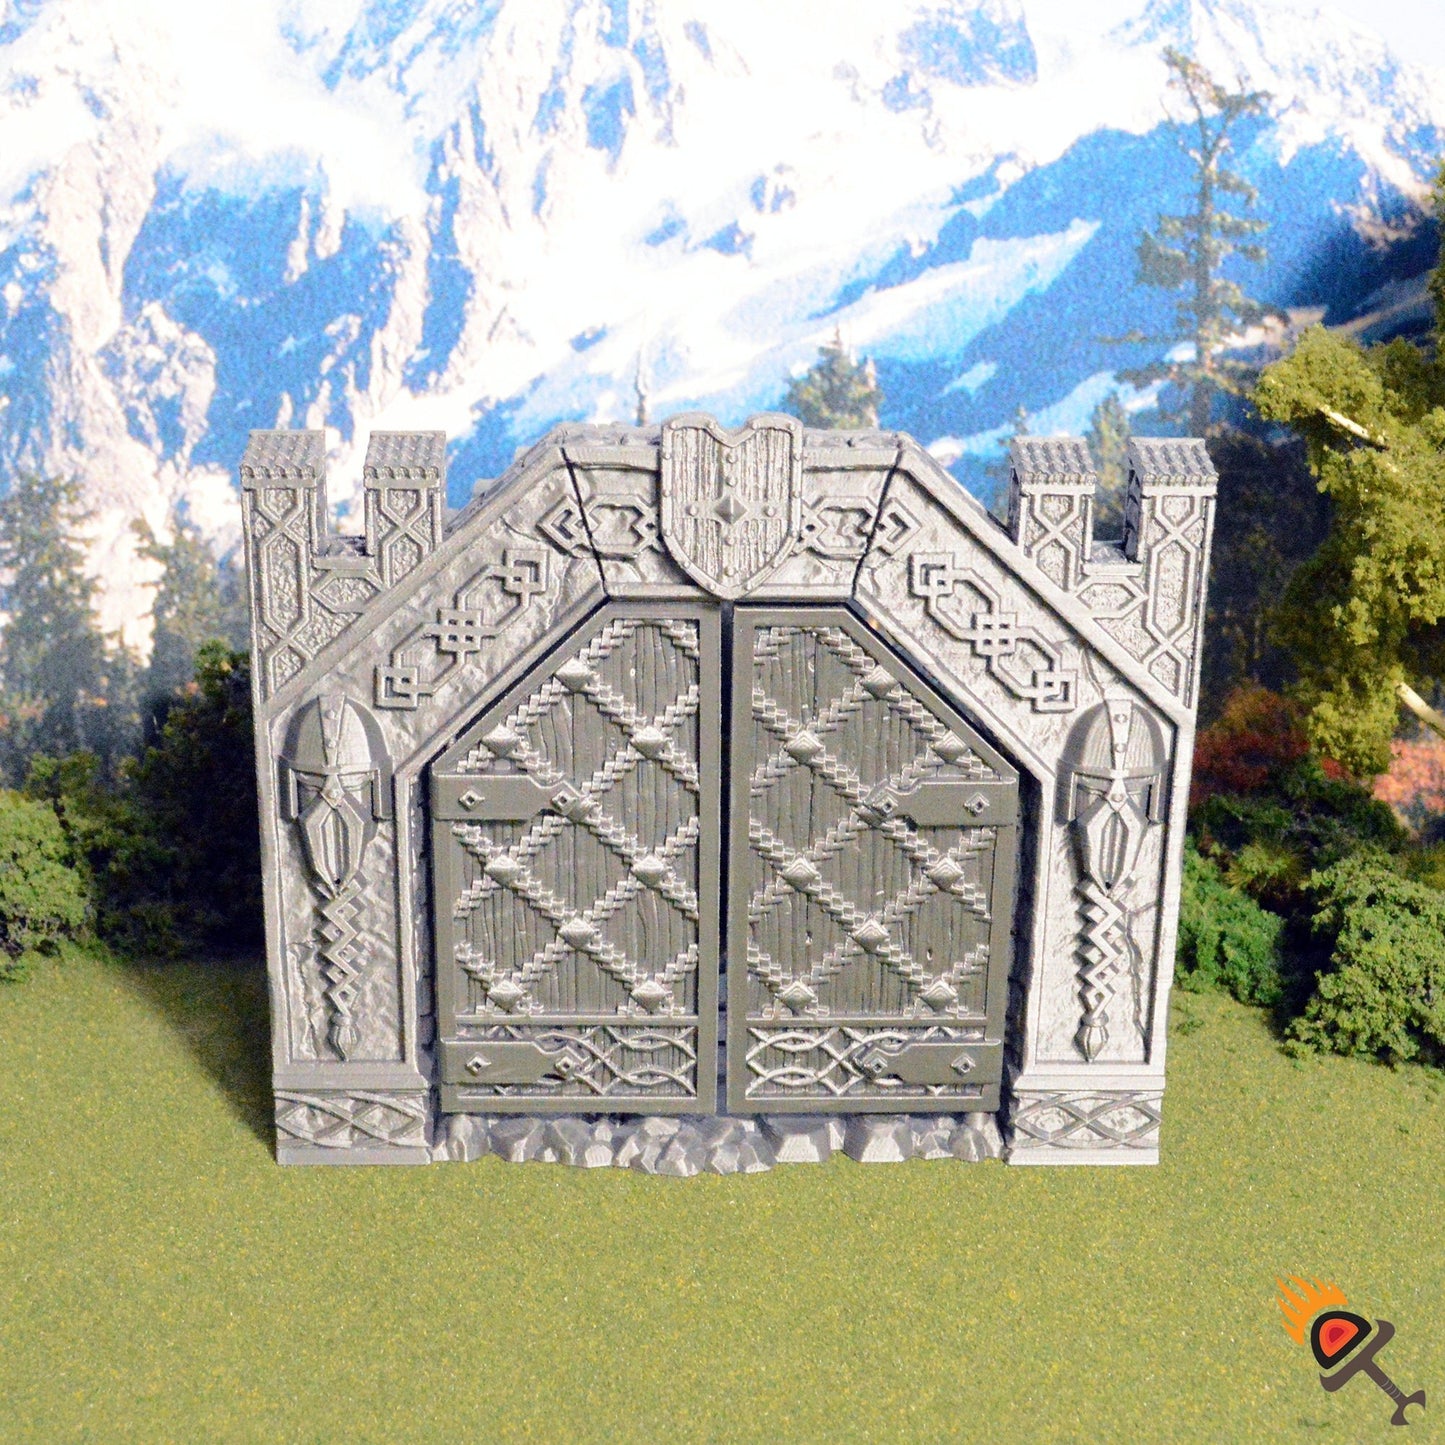 Ironhelm Forge Gate 15mm 28mm for D&D Terrain, DnD Pathfinder Warhammer 40k Dwarven Castle Gate - Modular OpenLOCK